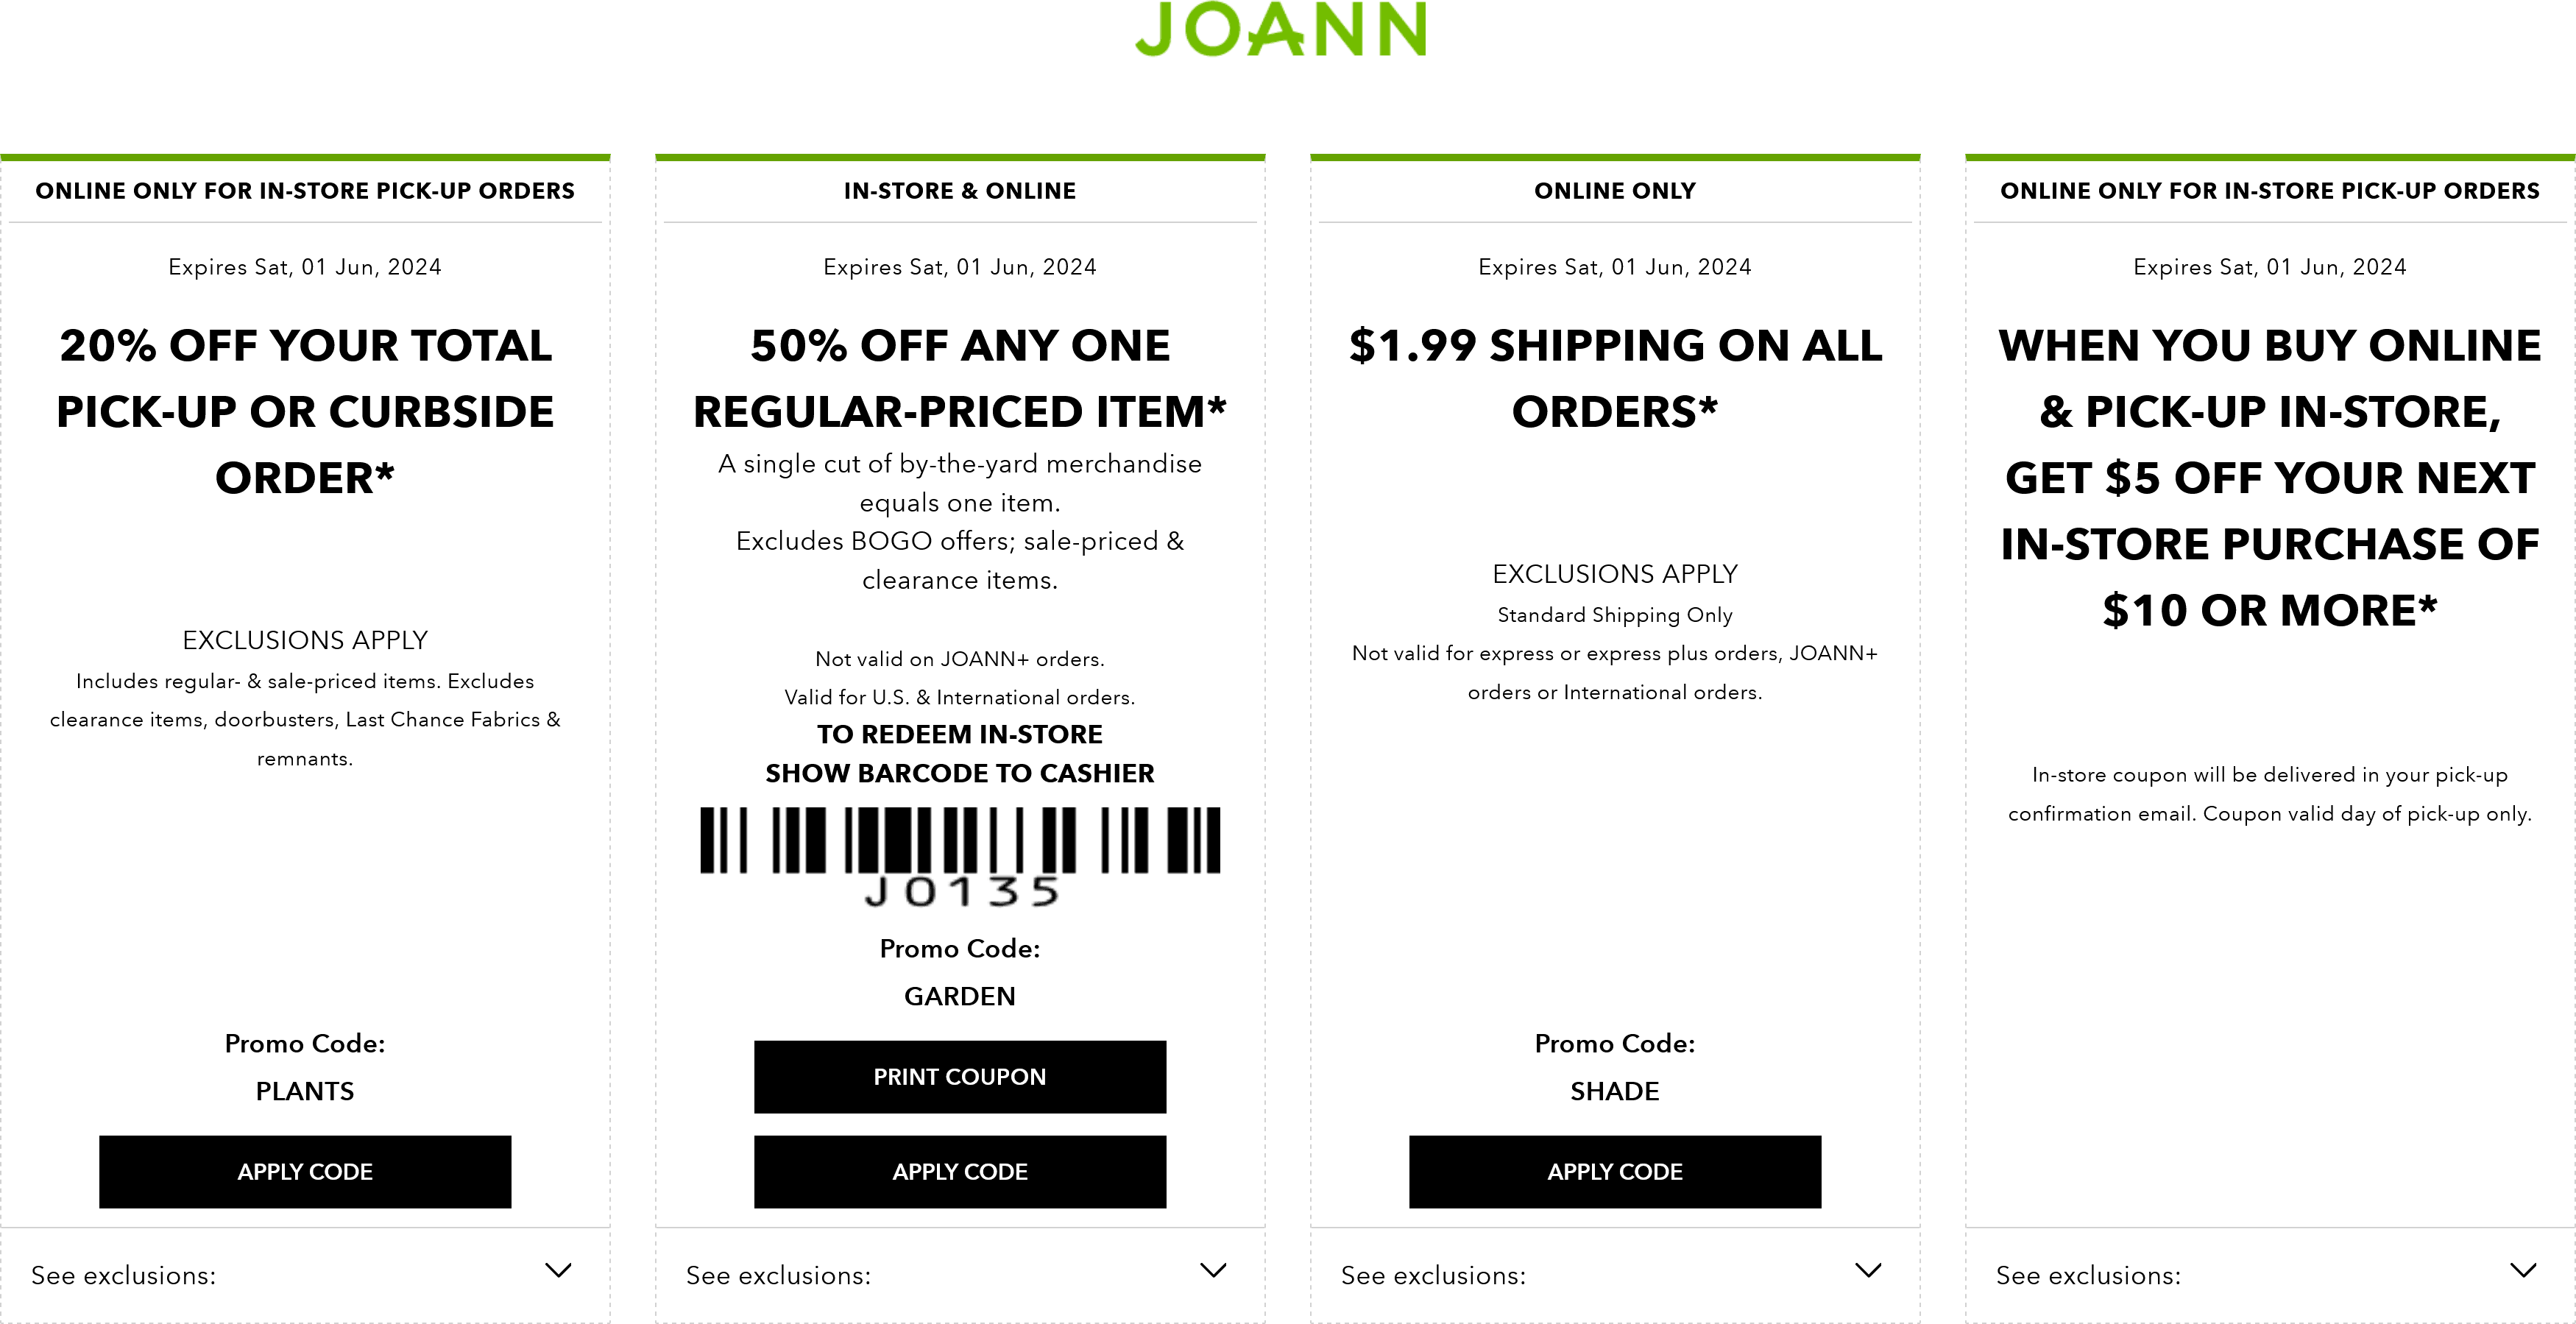 Joann stores Coupon  50% off a single item at Joann, or online via promo code GARDEN #joann 